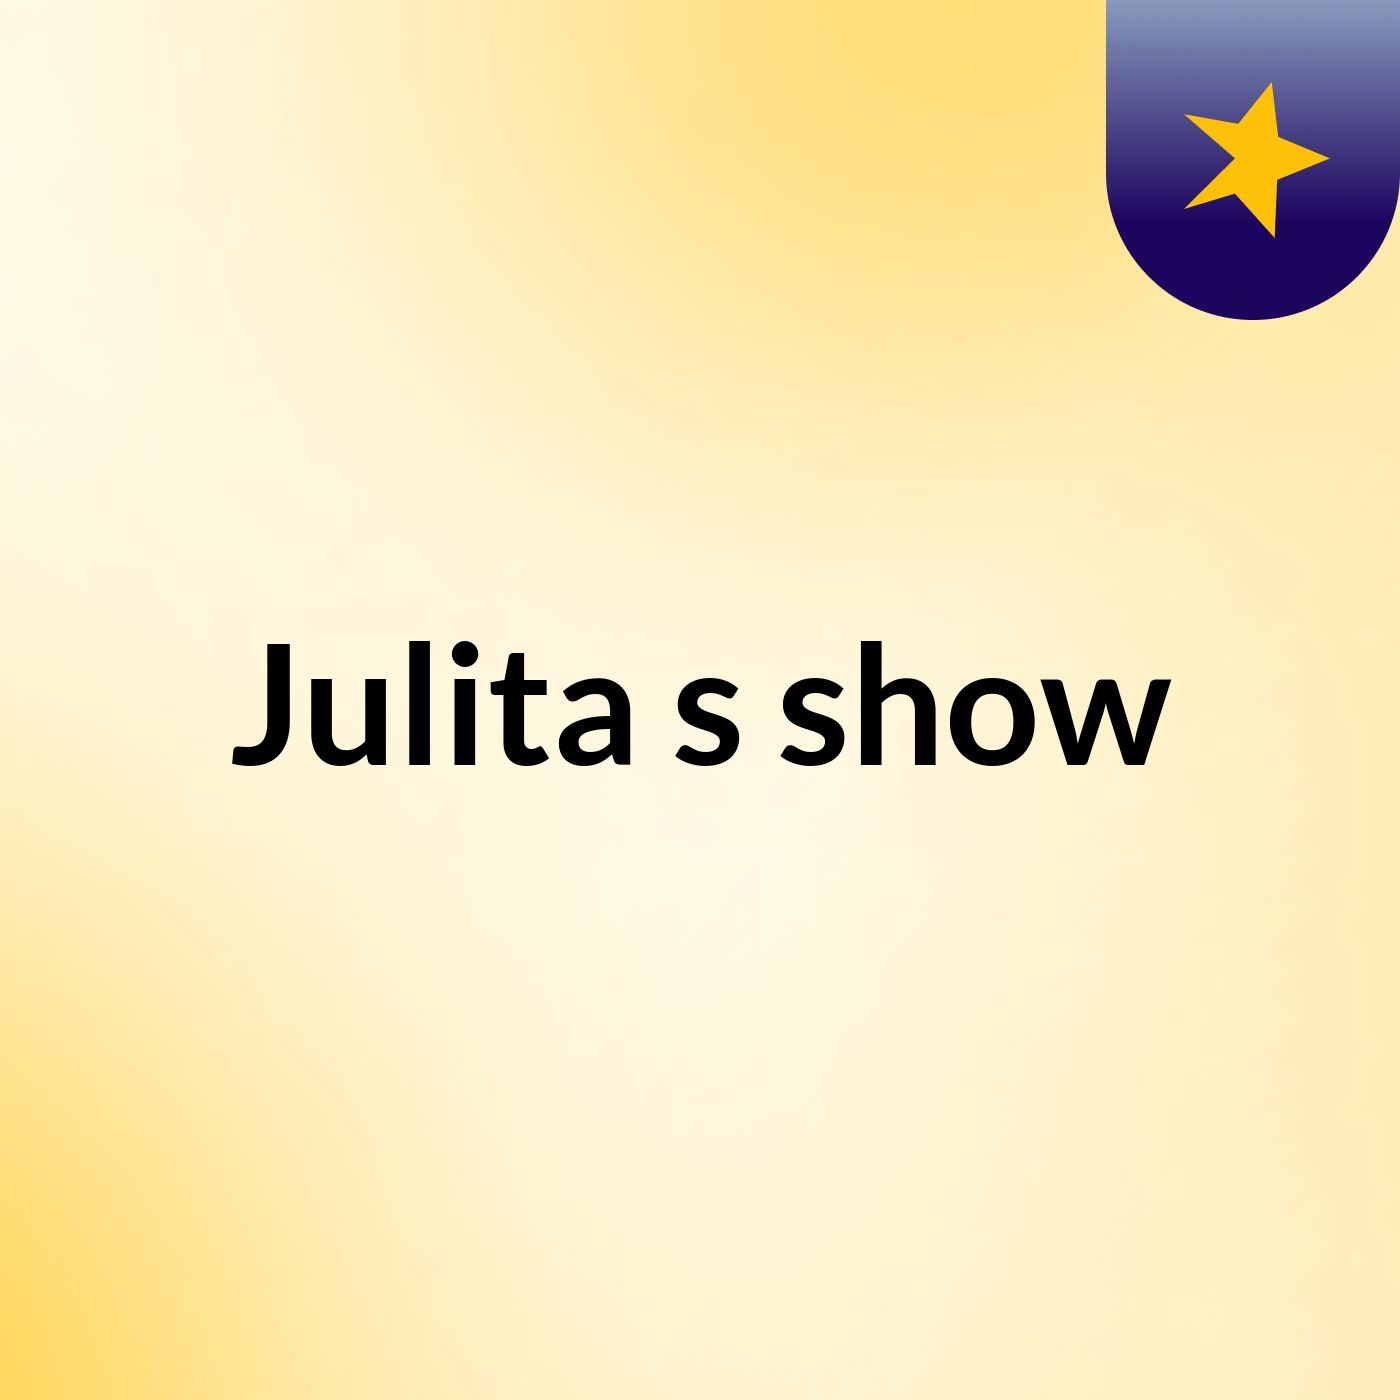 Julita's show